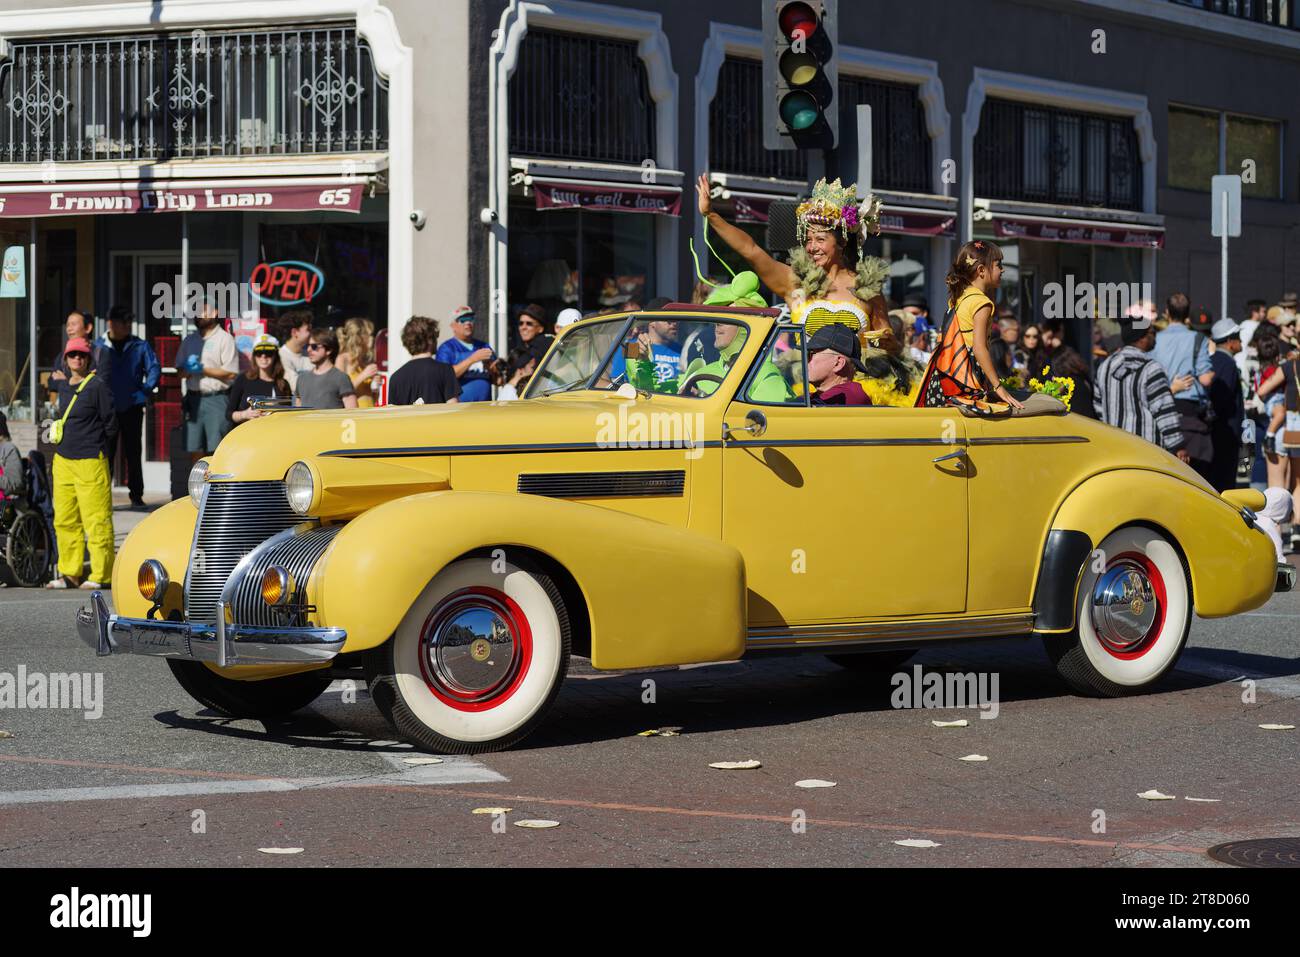 44th Doo Dah Parade in Pasadena, California. Unidentified participants including the parade queen riding in a vintage Cadillac car. Stock Photo